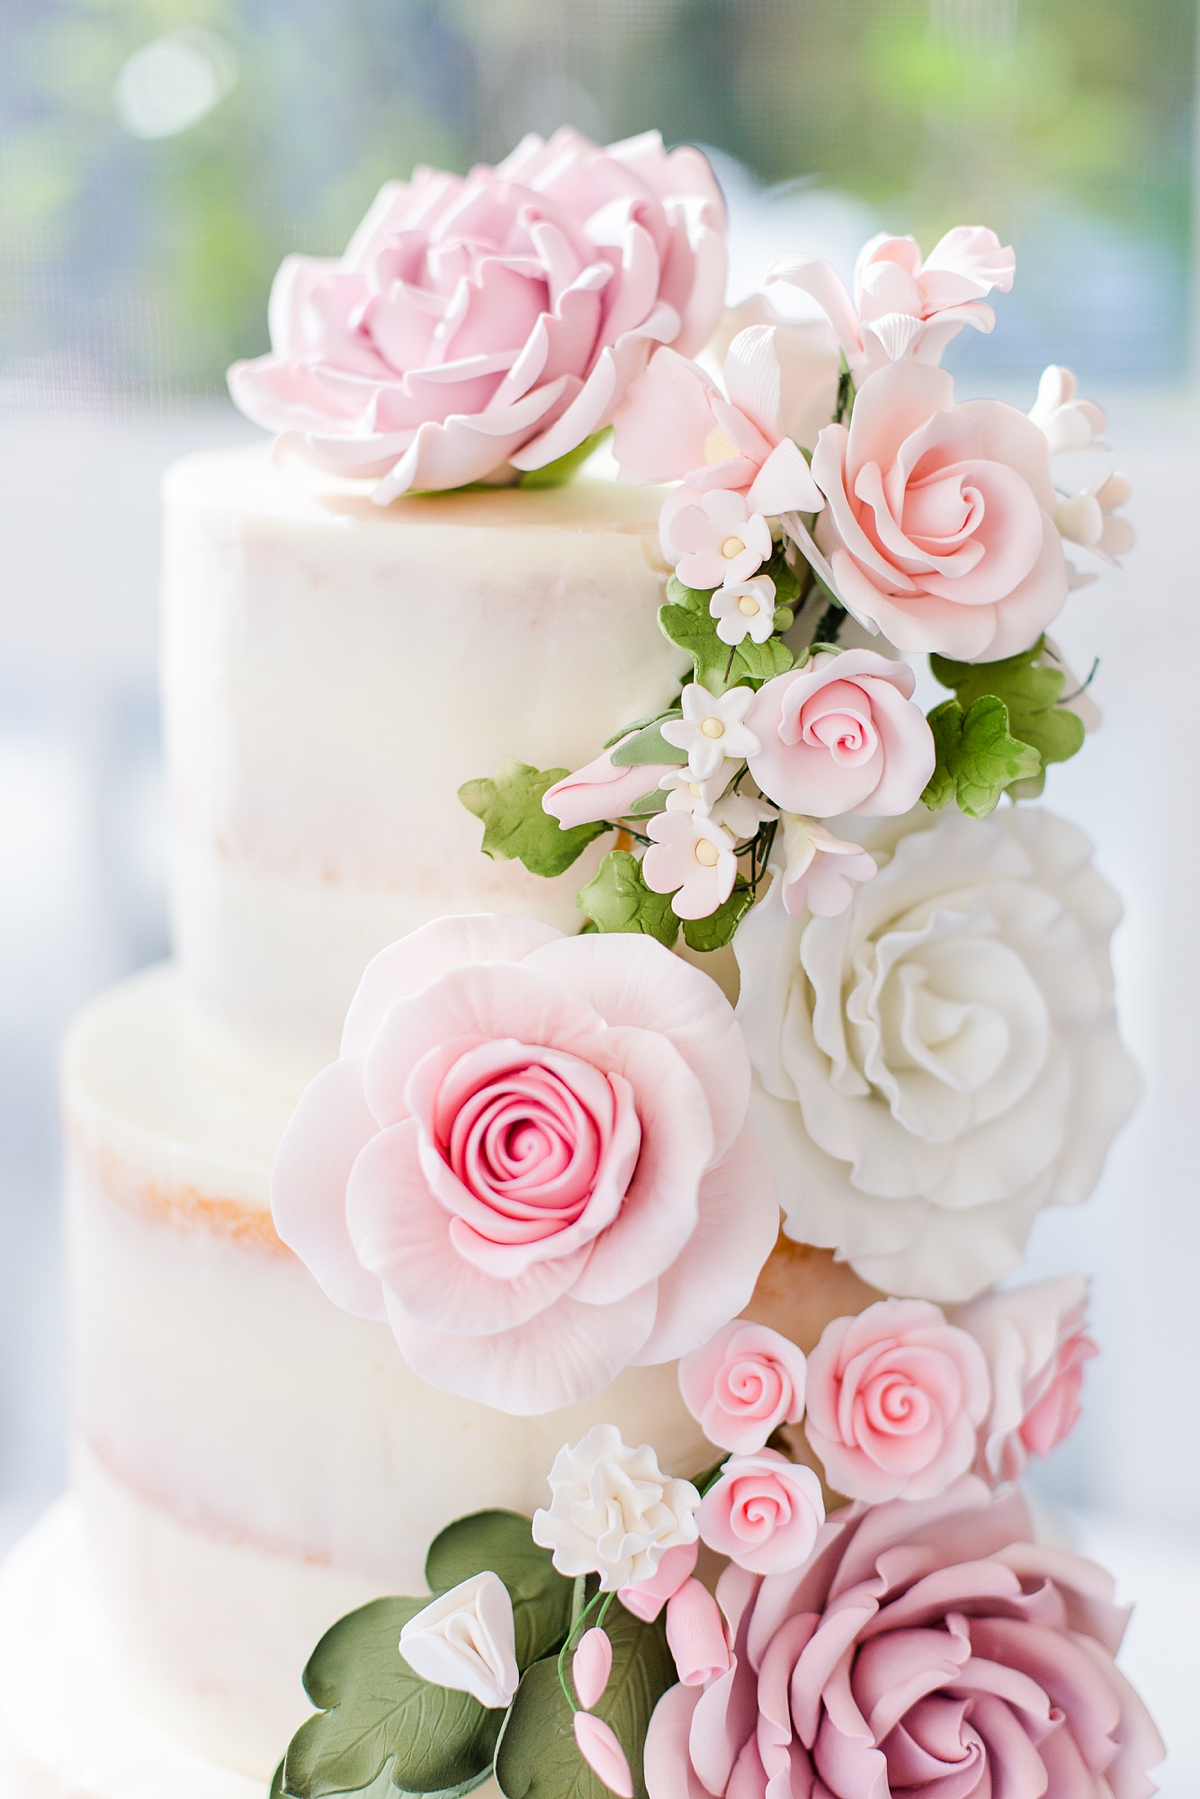 Sugar Flower Romantic Wedding Cake at Virginia Cliffe Inn Wedding Reception. Wedding Photography by Richmond Wedding Photographer Kailey Brianne Photography.